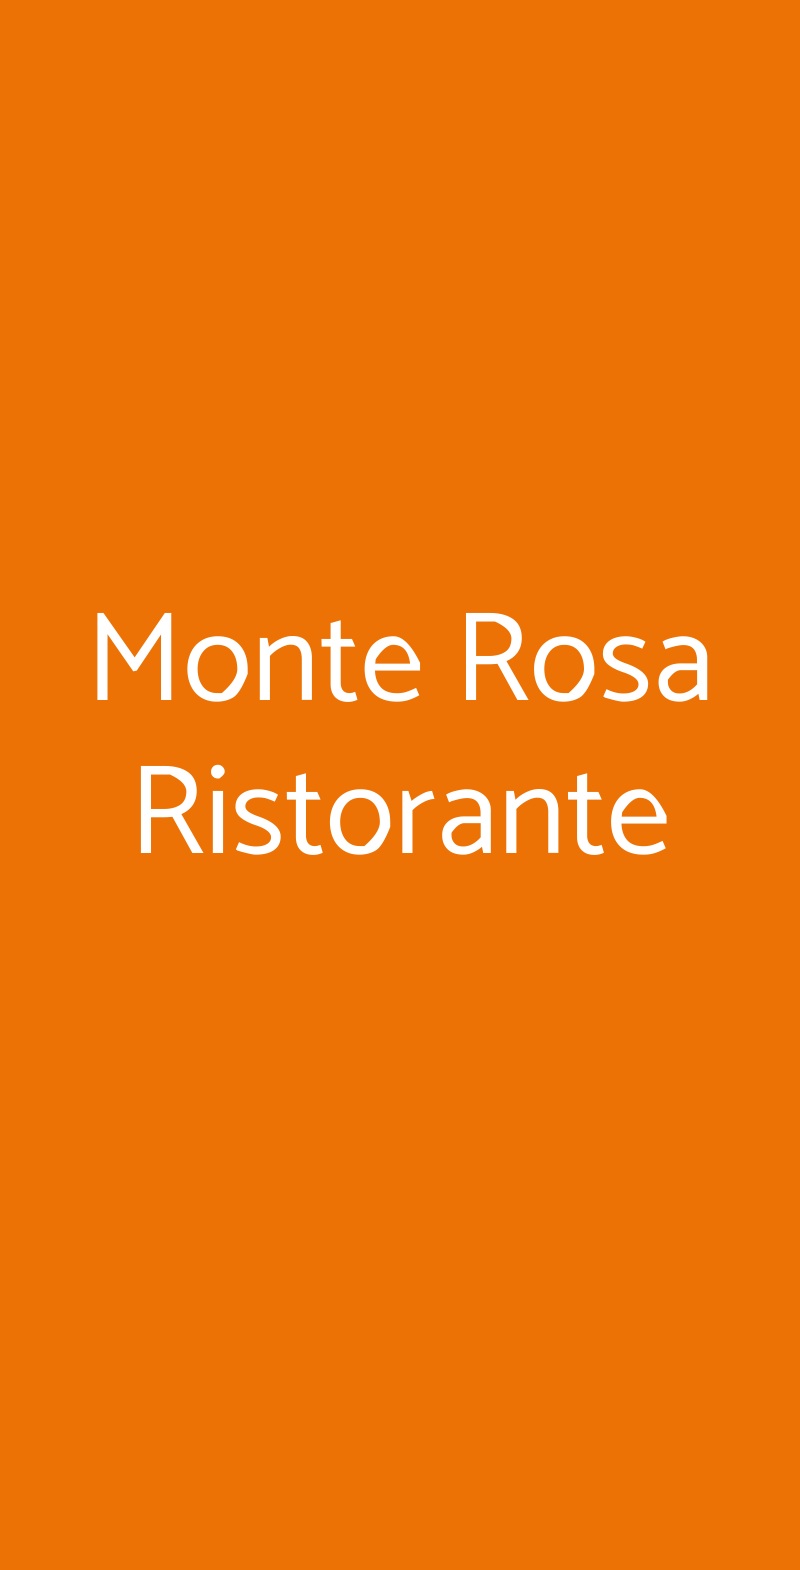 Monte Rosa Ristorante Chiavari menù 1 pagina